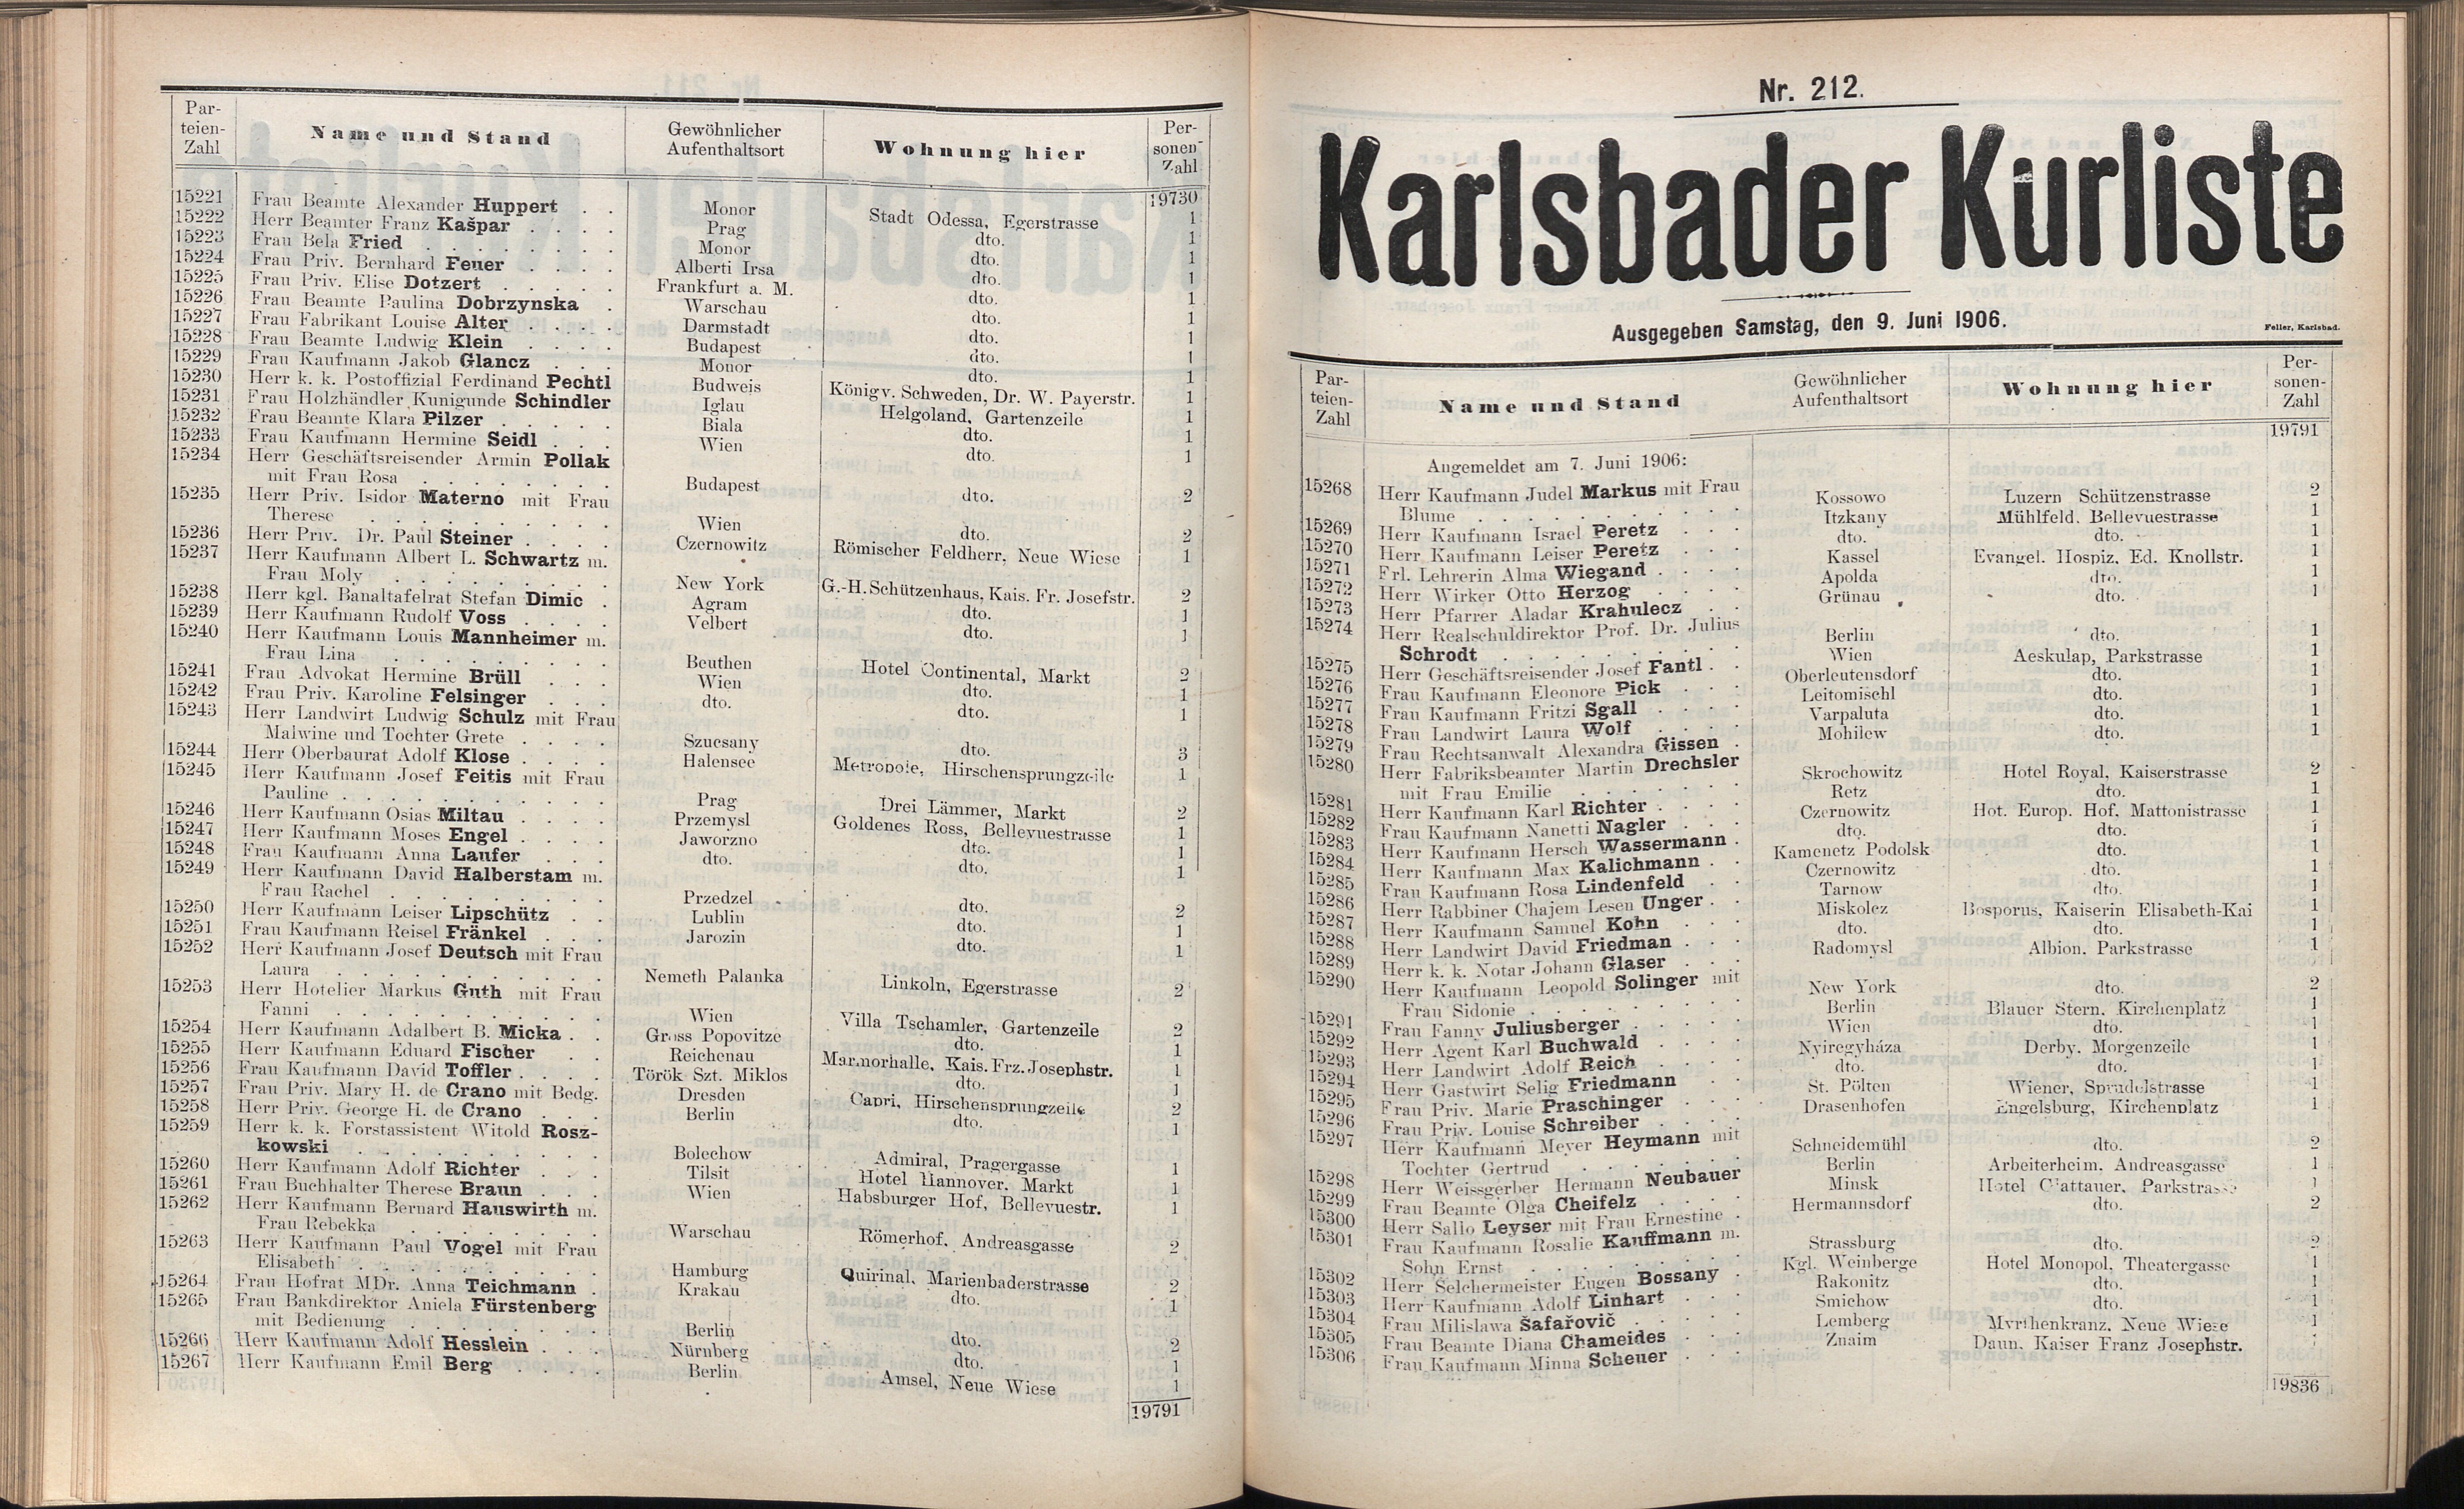 326. soap-kv_knihovna_karlsbader-kurliste-1906_3270